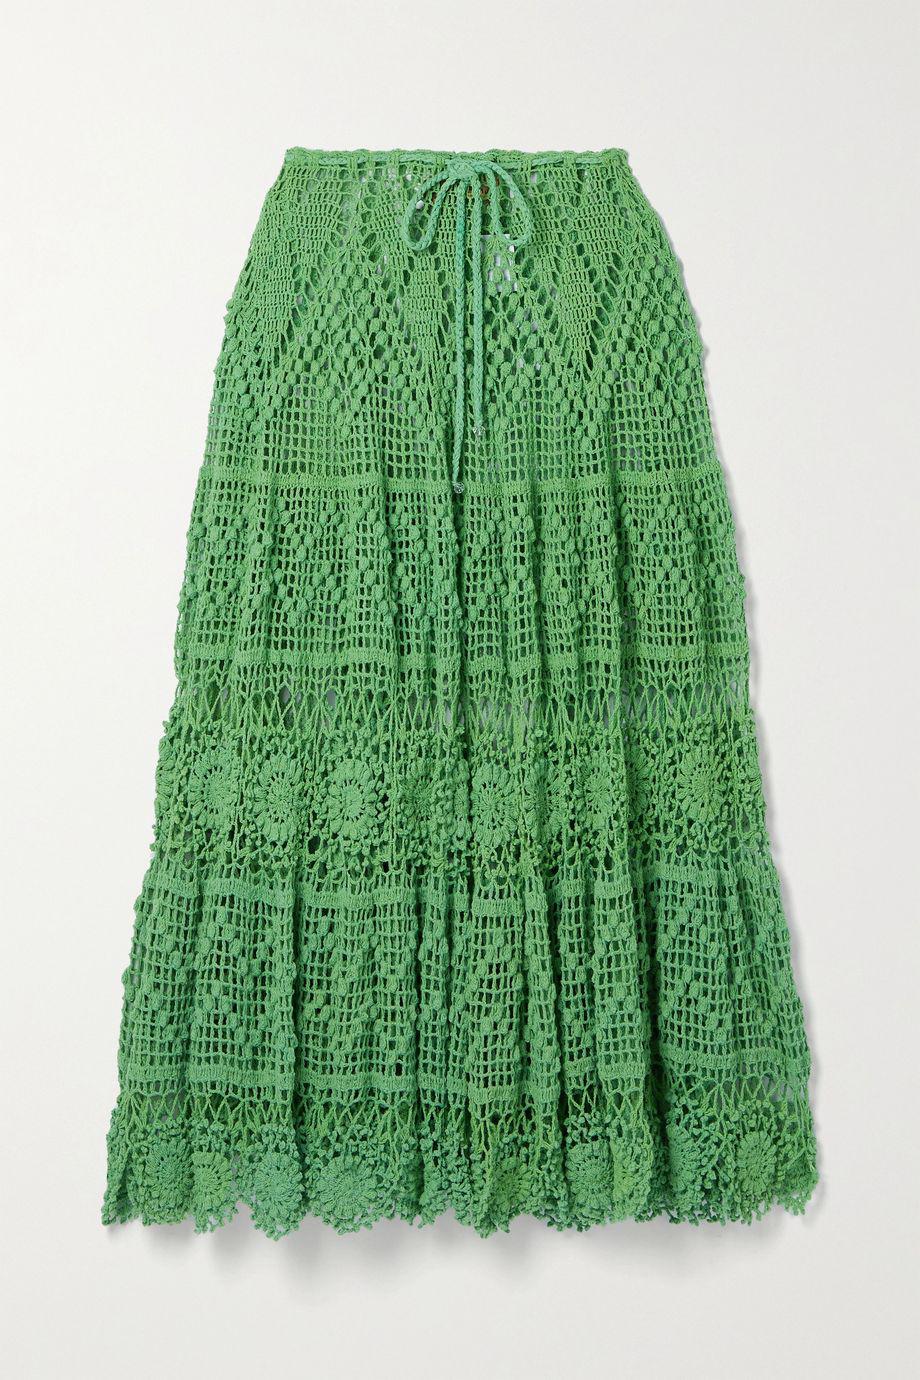 Joyce crocheted cotton maxi skirt by ALIX PINHO